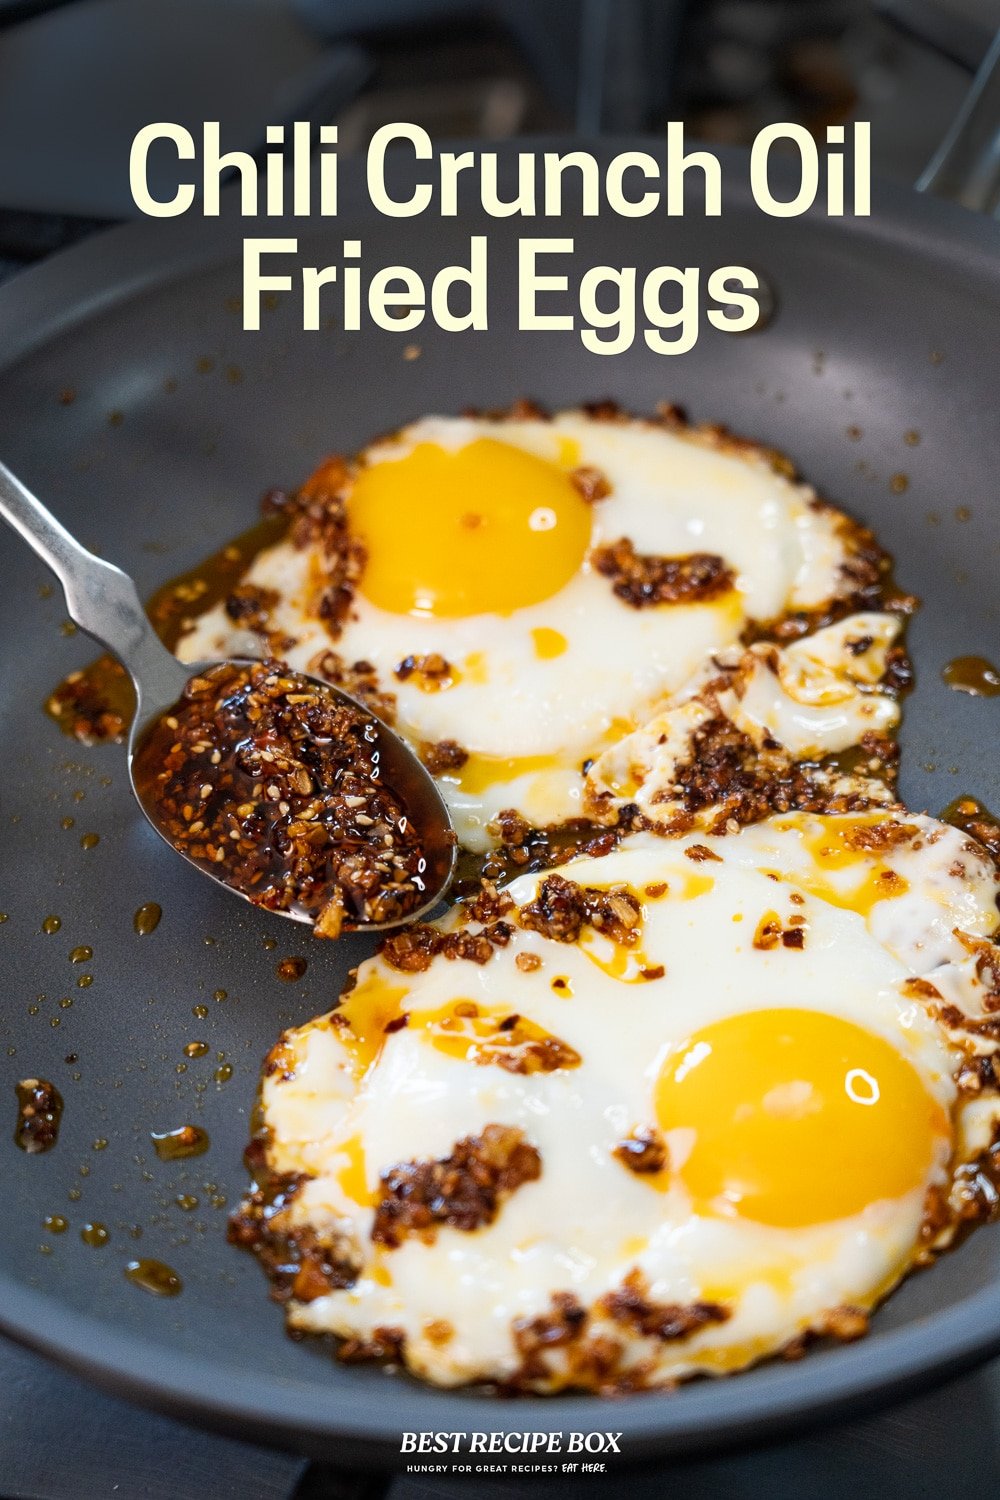 https://bestrecipebox.com/images/Chili-Crisp-Fried-Eggs-BestRecipeBox-2.jpg